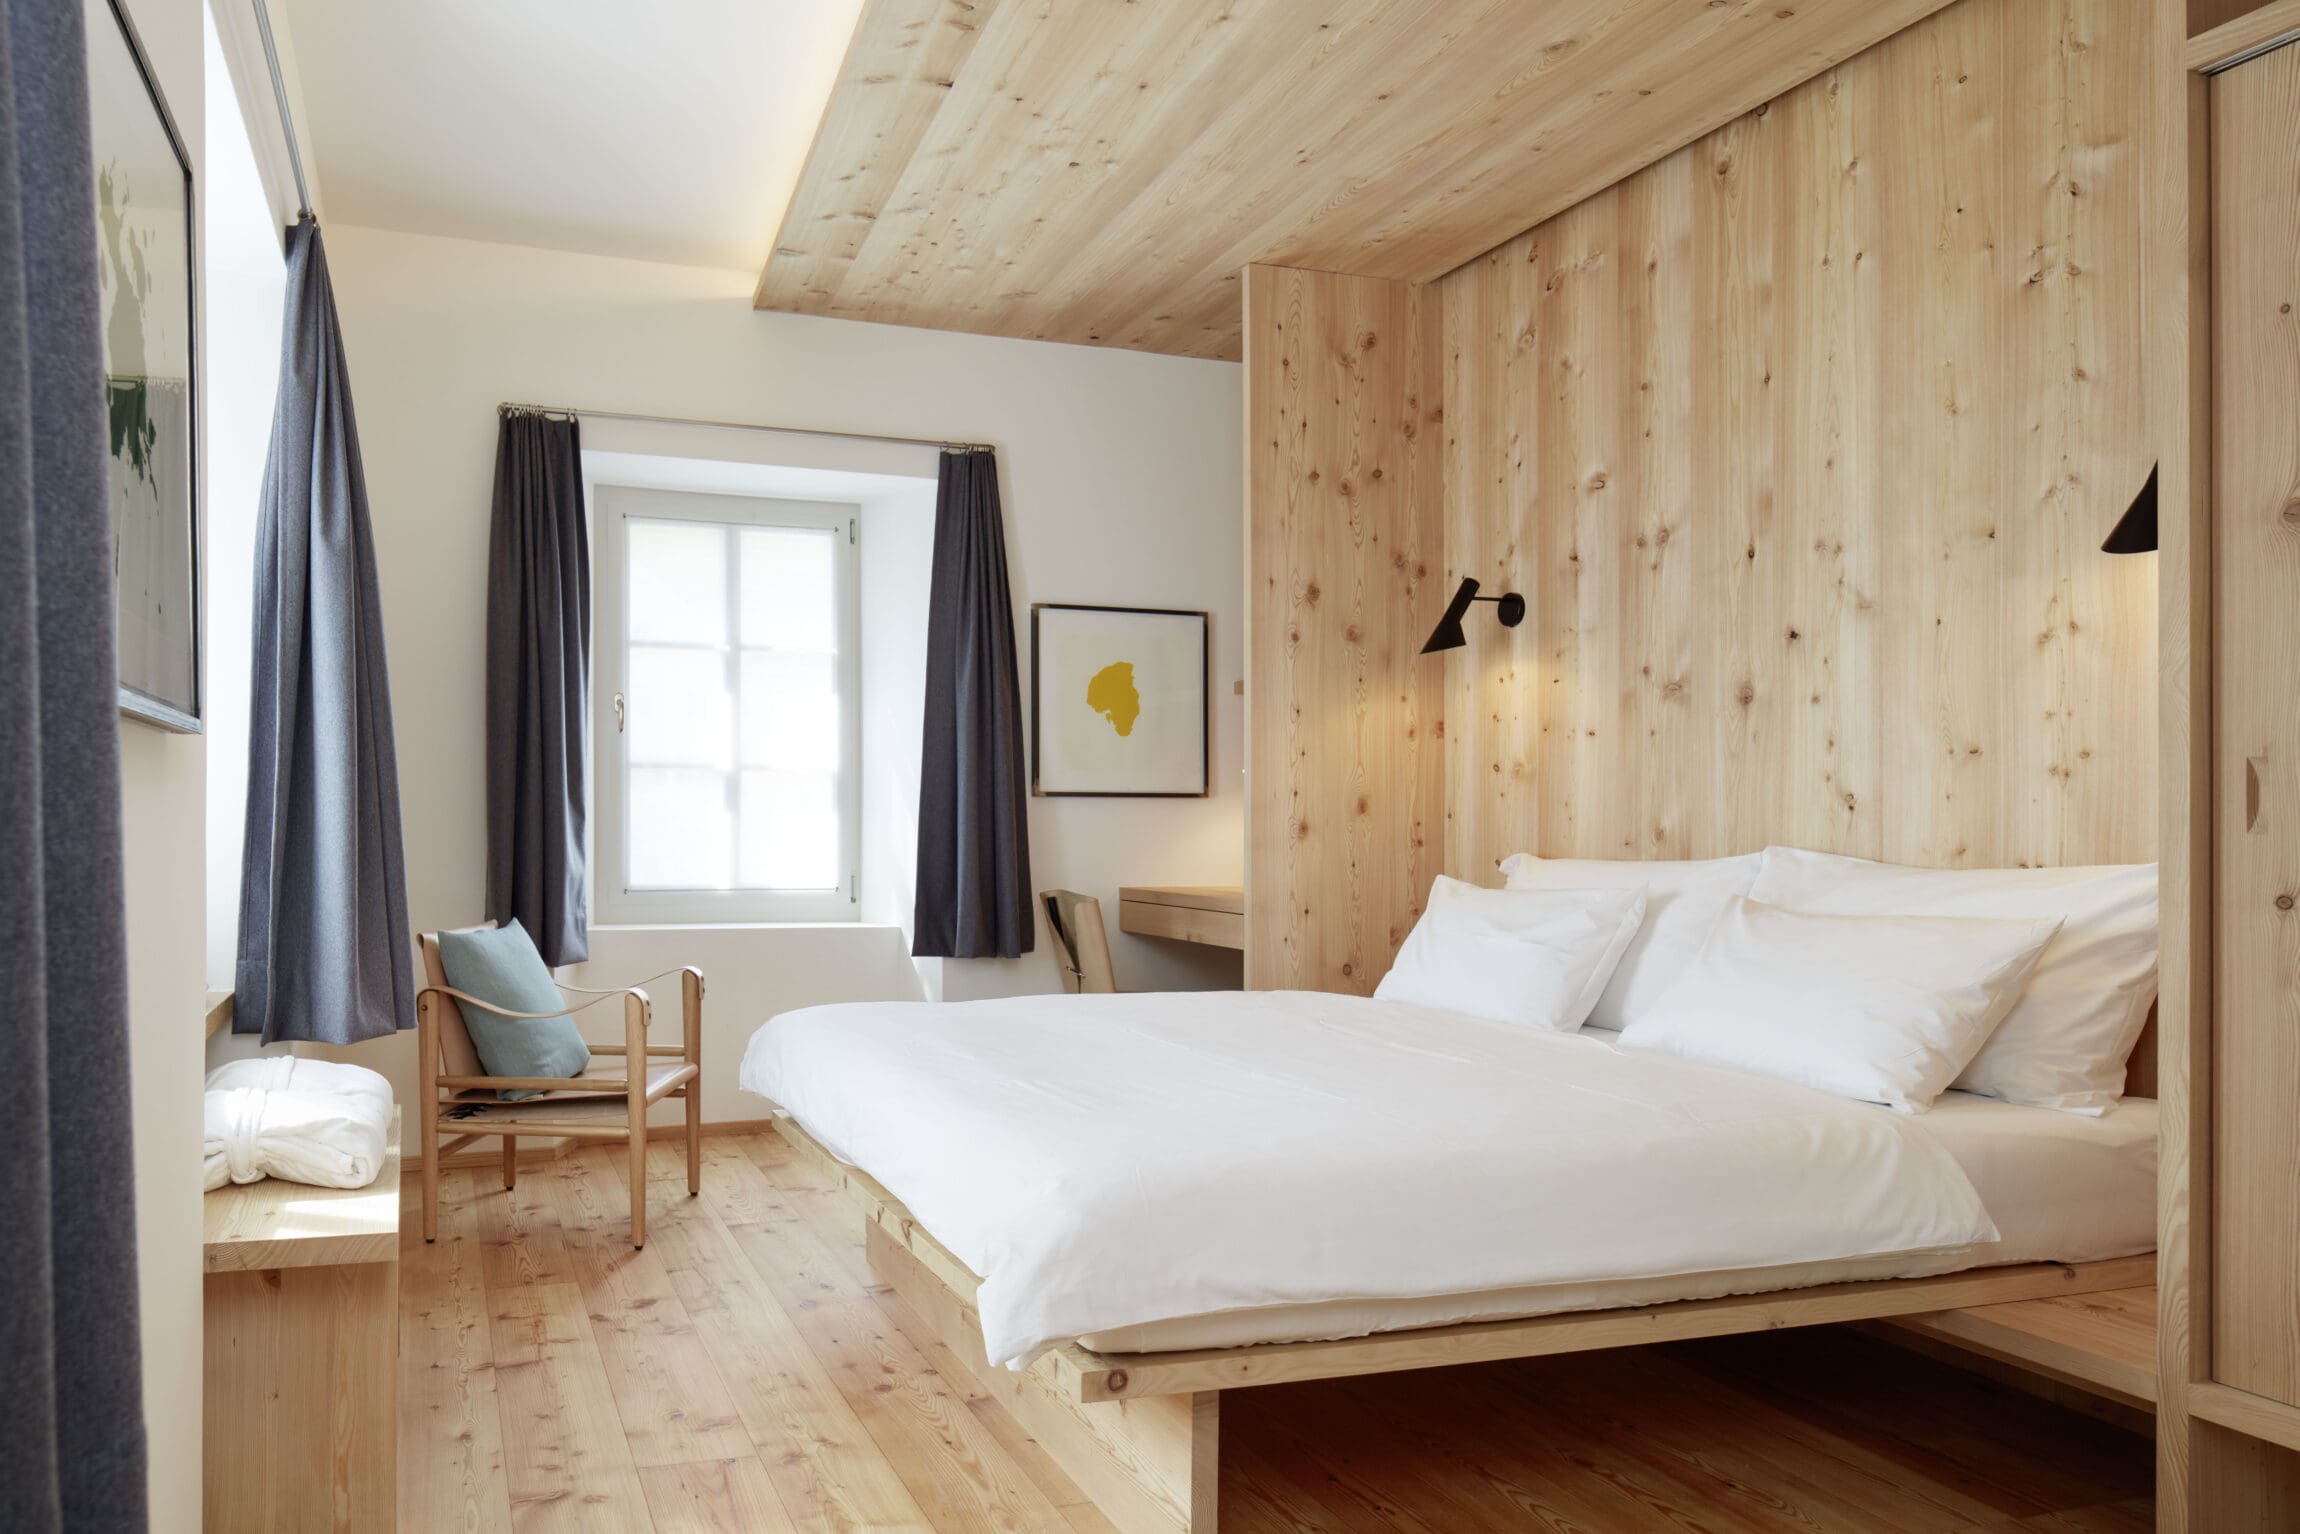 A zirbe-clad bedroom in Krone Säumerei am Inn